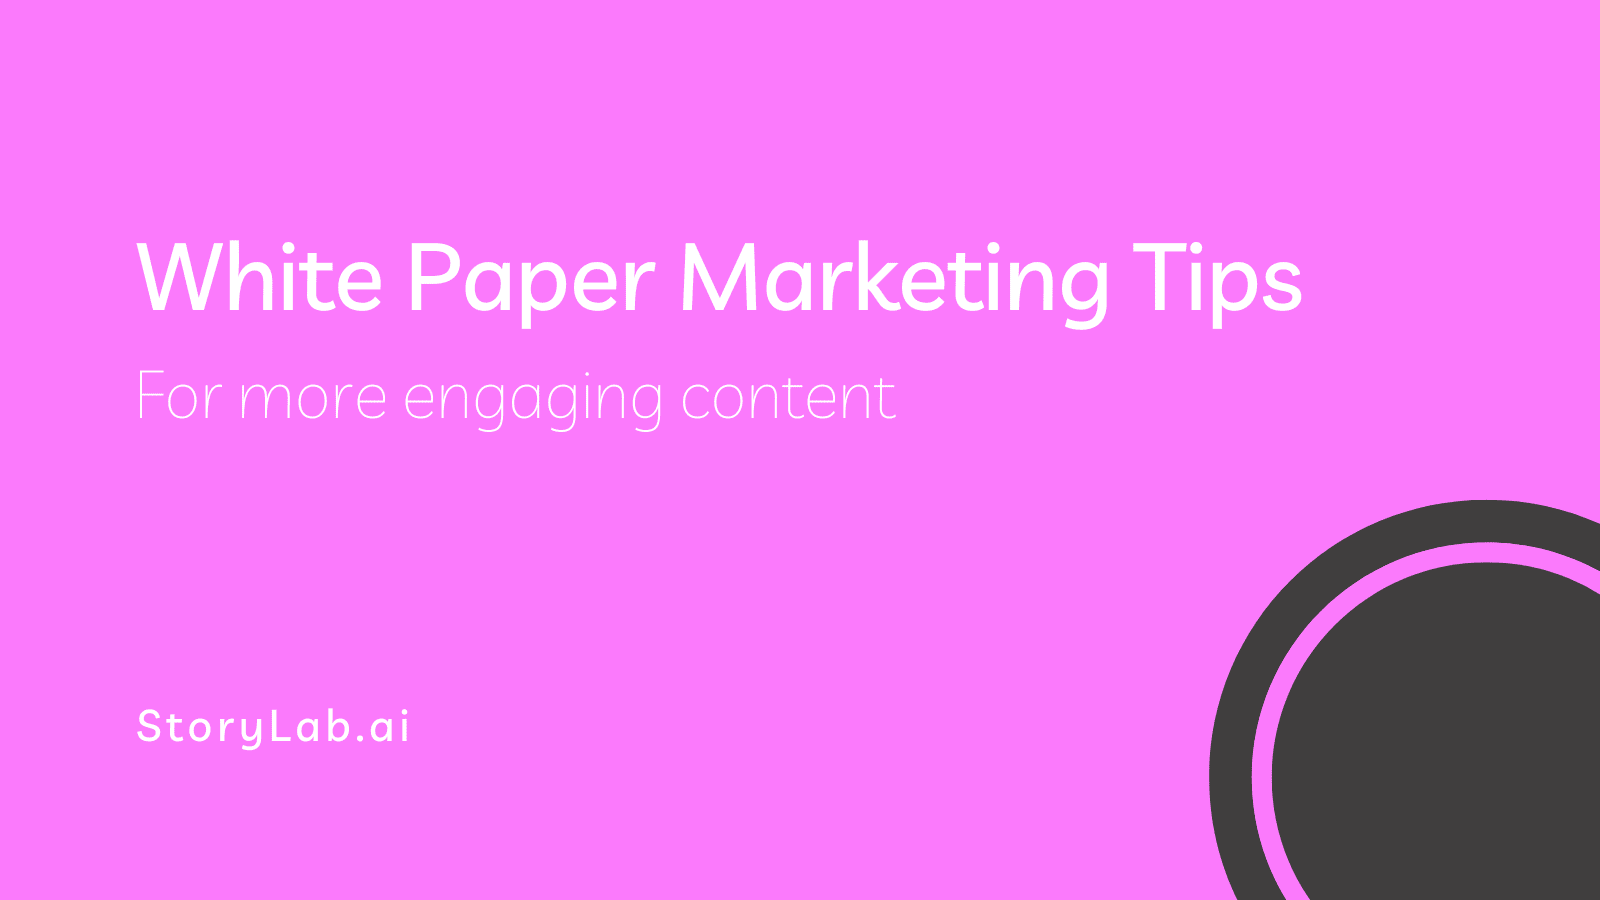 Whitepaper marketingtips